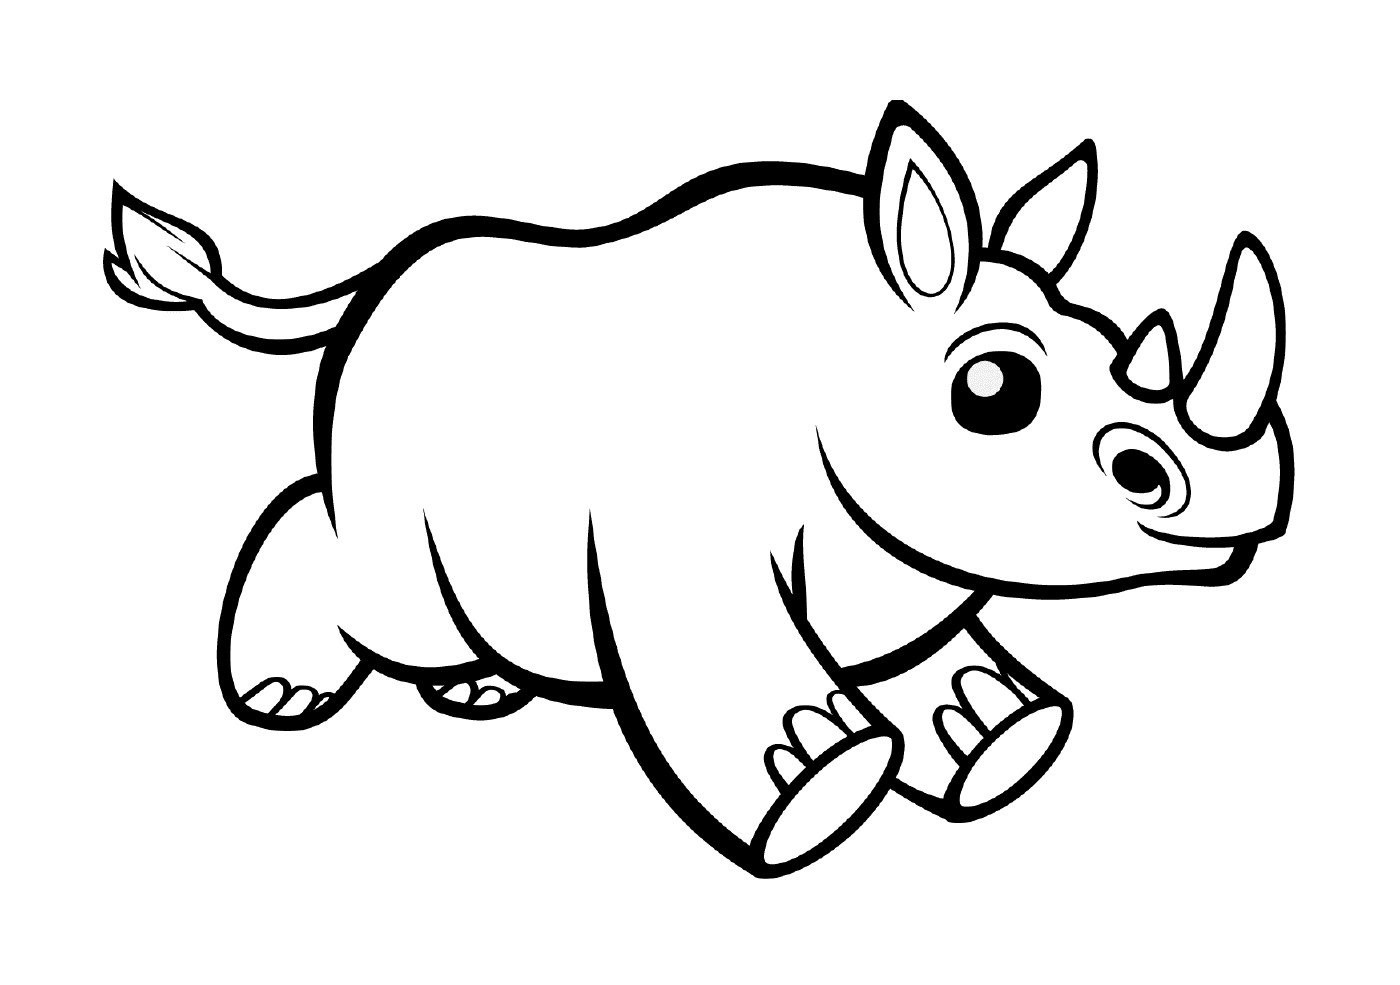  An animal resembling a rhinoceros 